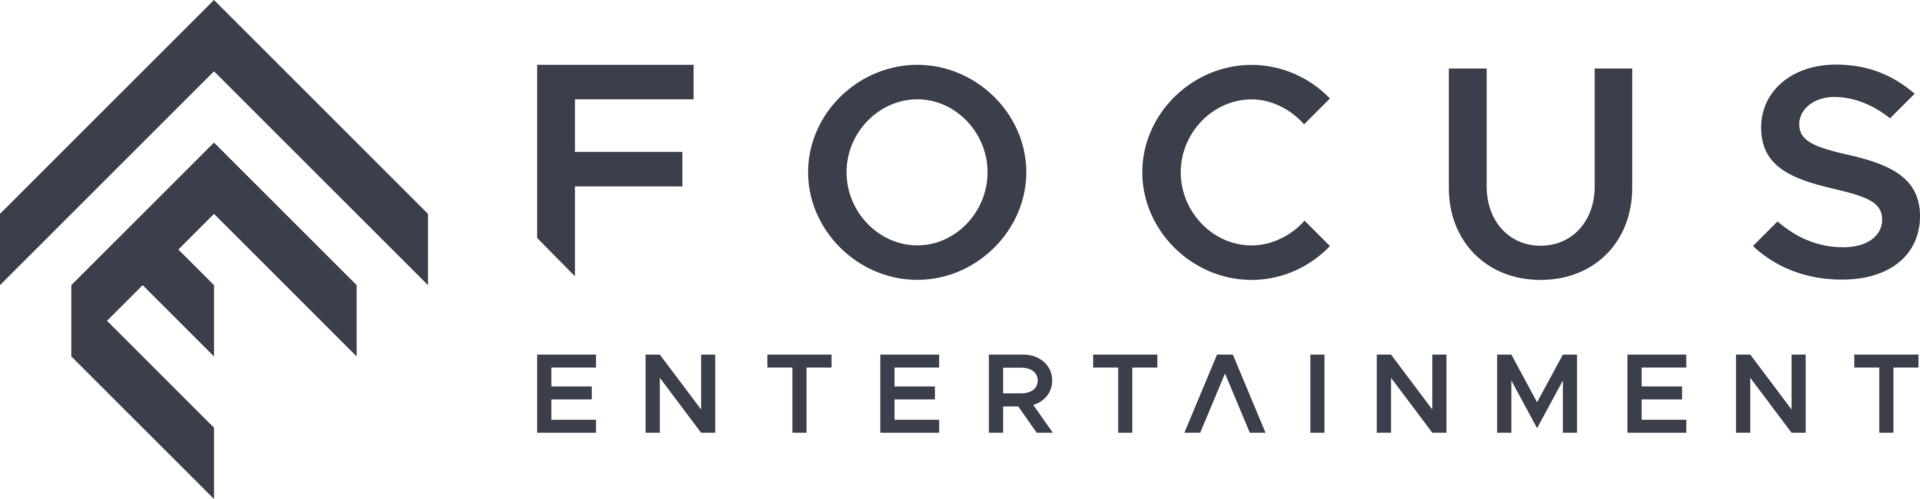 Focus Entertainment logo